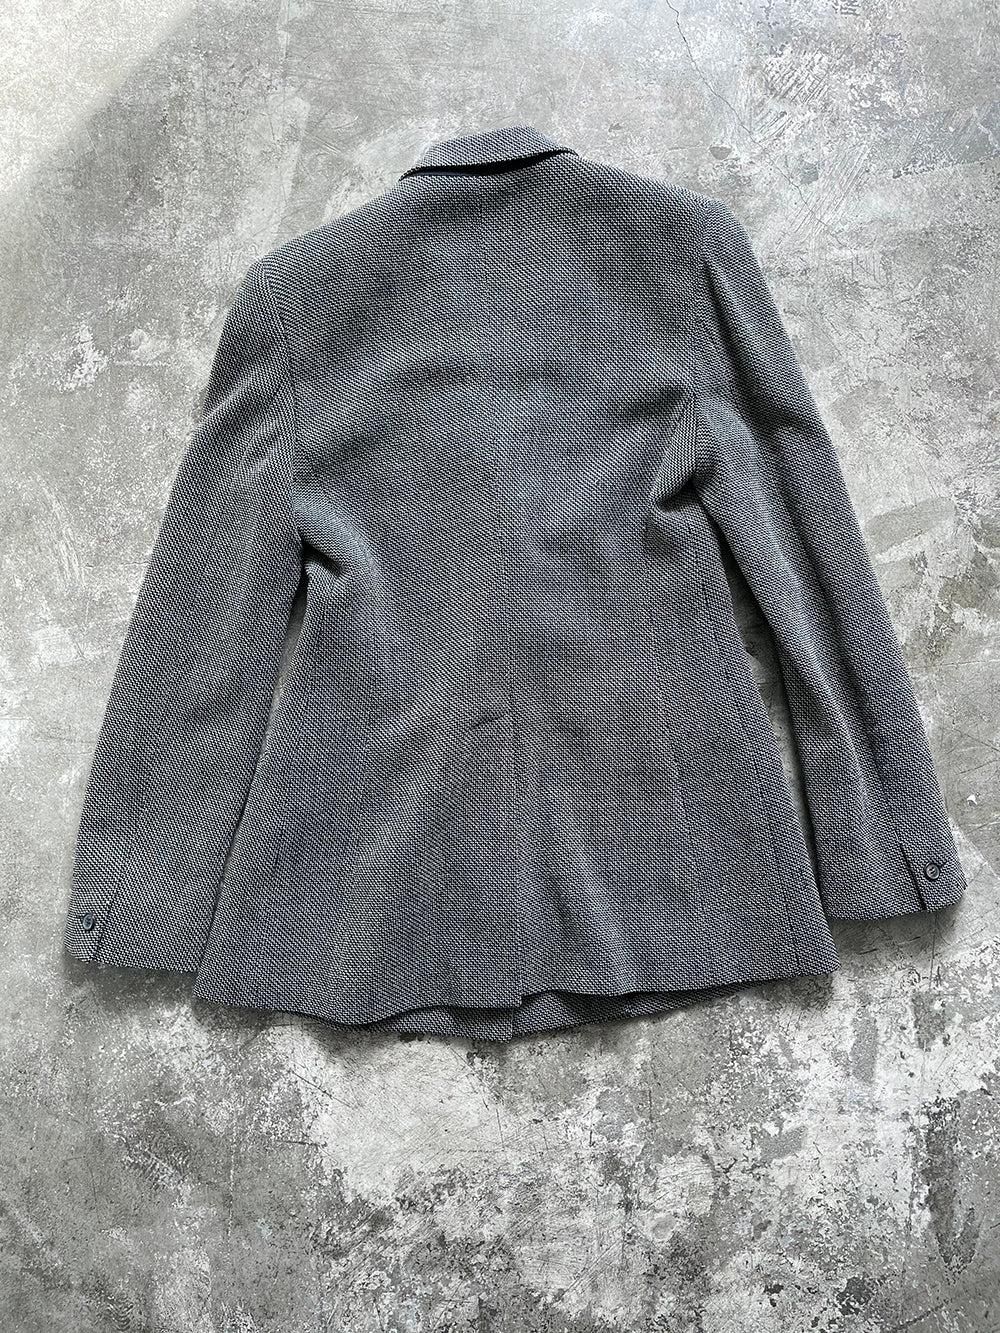 Oliver velentino gray wool jacket